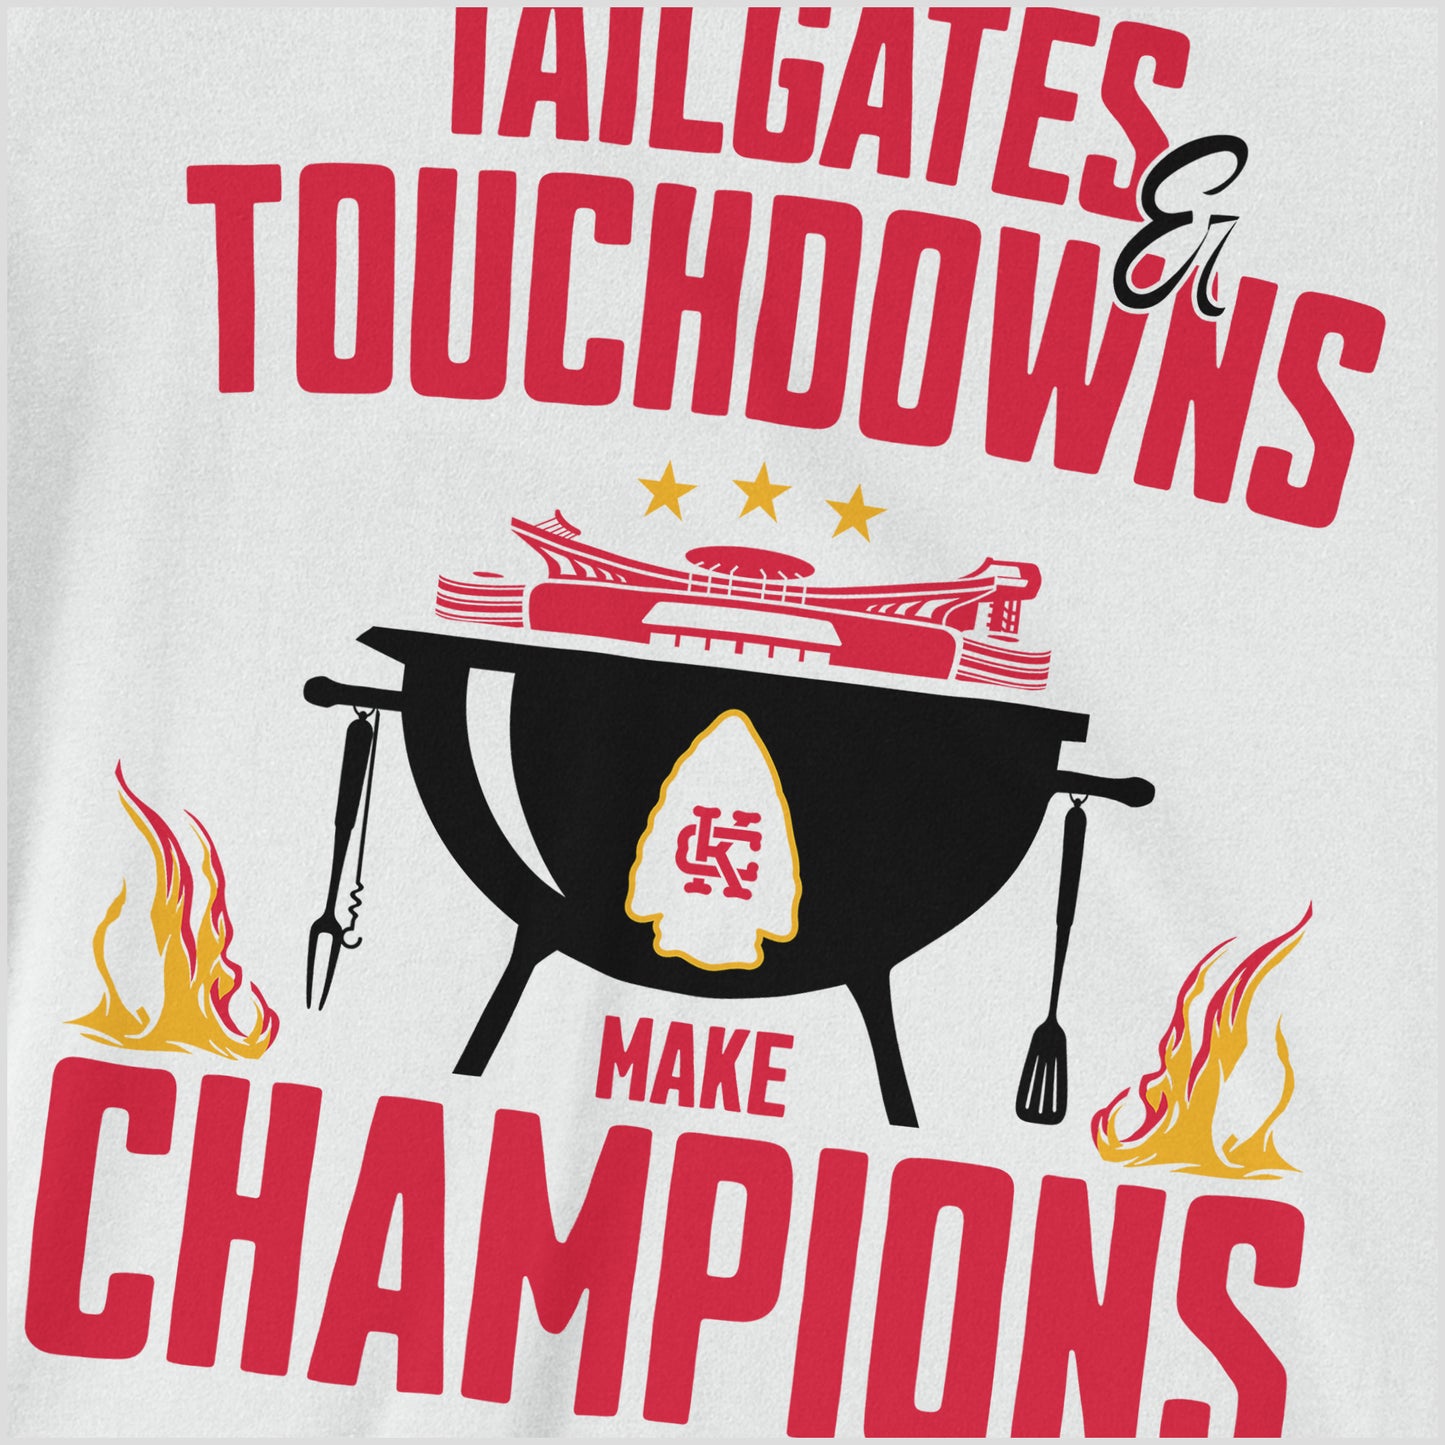 Tailgates & Touchdowns - Kansas City Chiefs T-Shirt